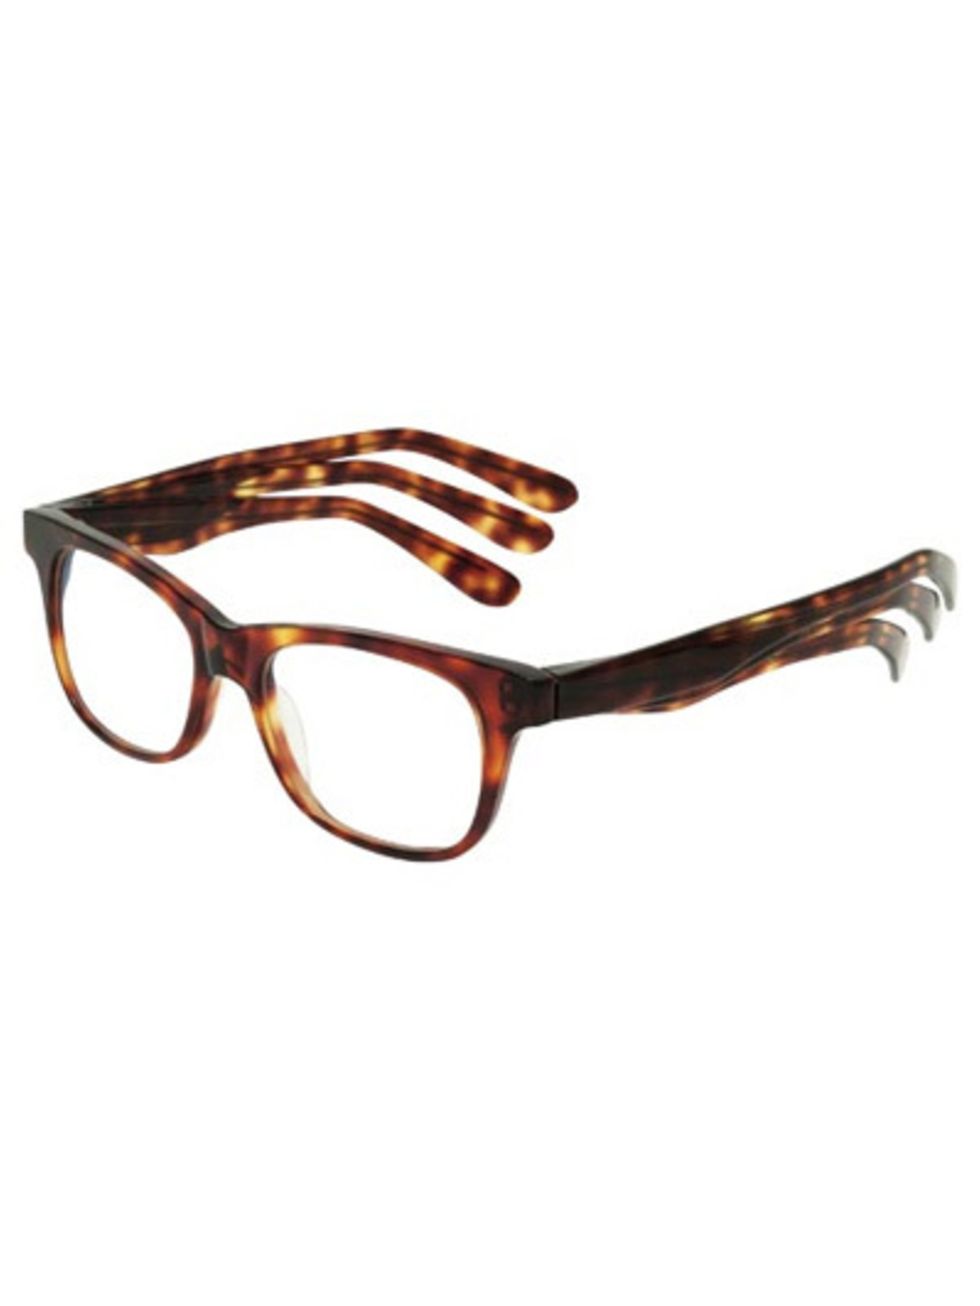 Eyewear, Vision care, Glasses, Product, Brown, Glass, Line, Amber, Orange, Tan, 